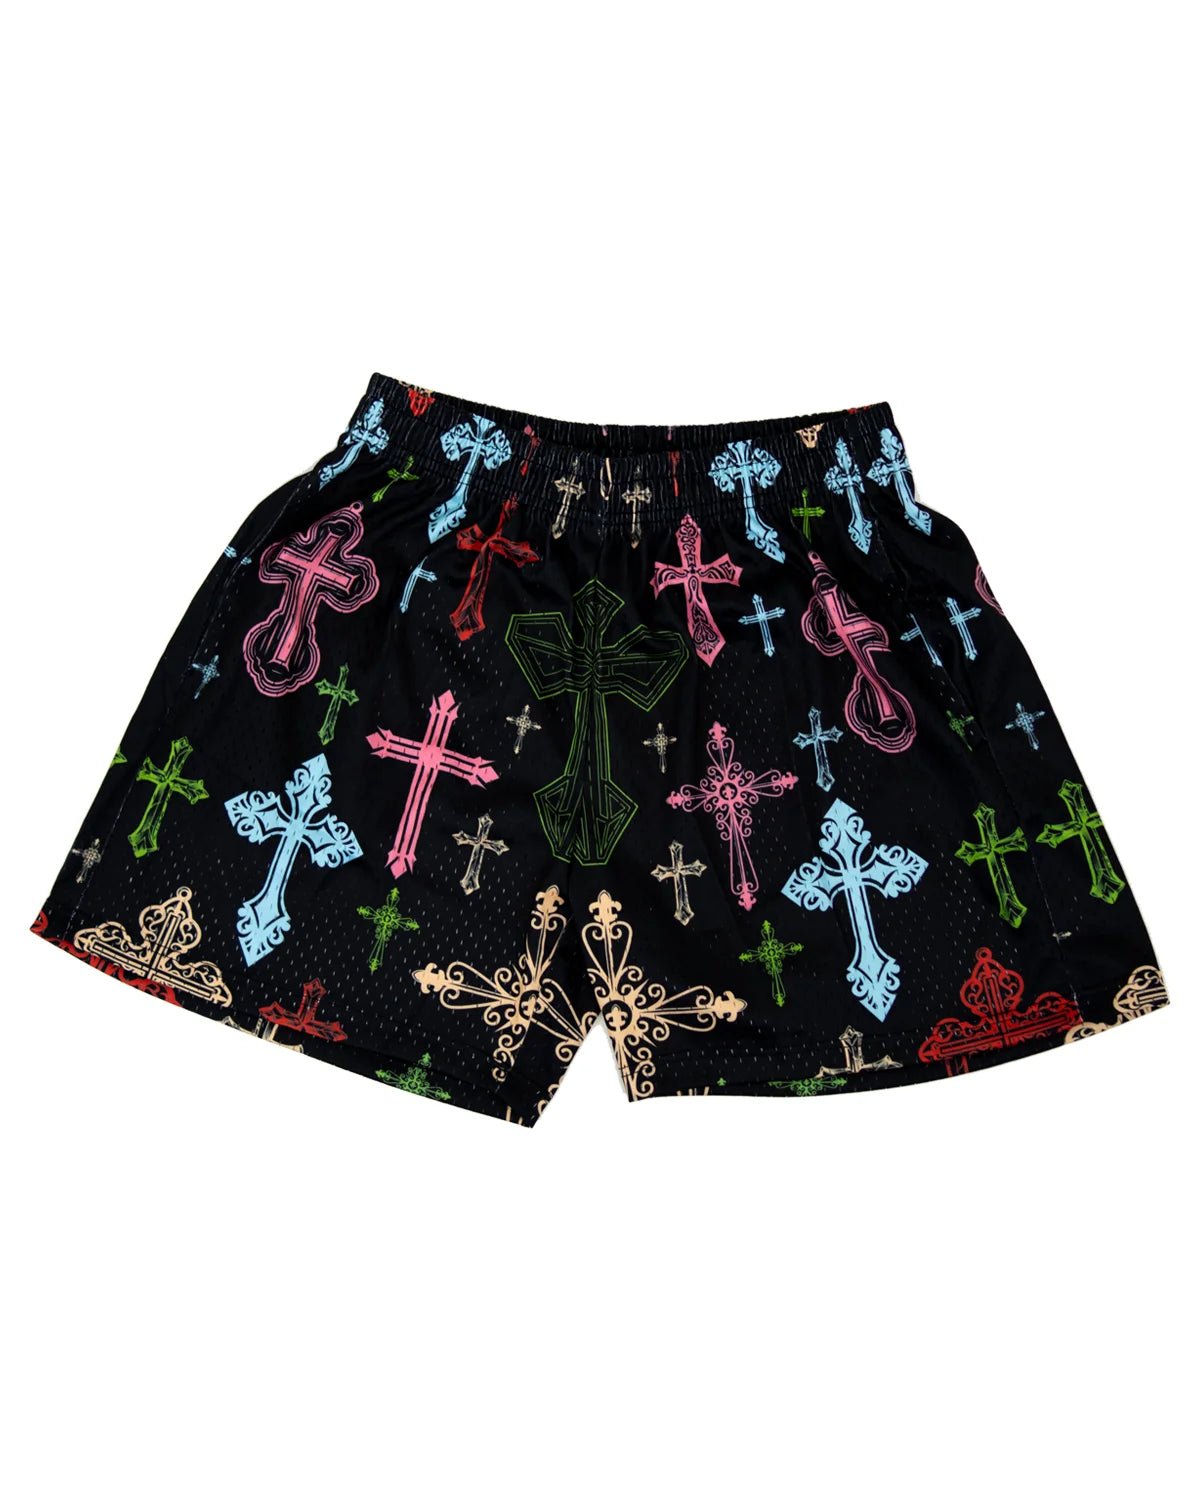 Black Cross Unisex Shorts - Walk In Faith Clothing